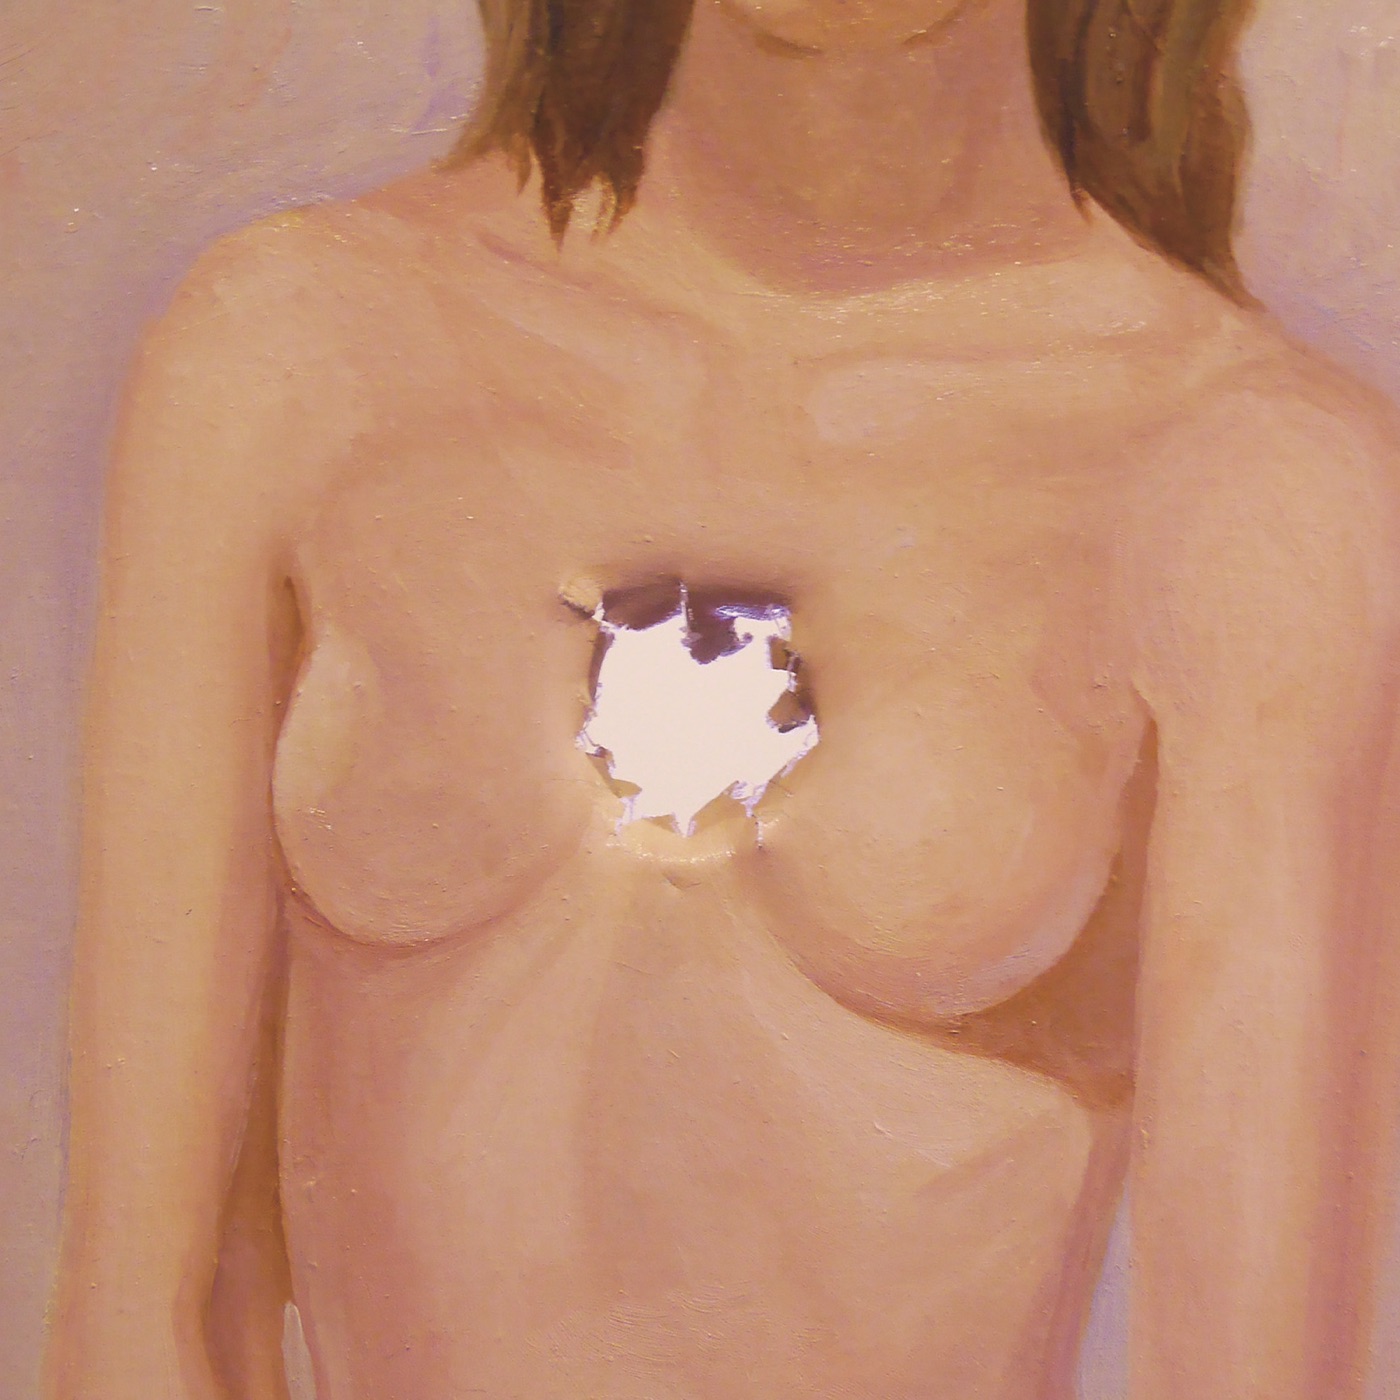 Atom Heart Mother by HARU NEMURI